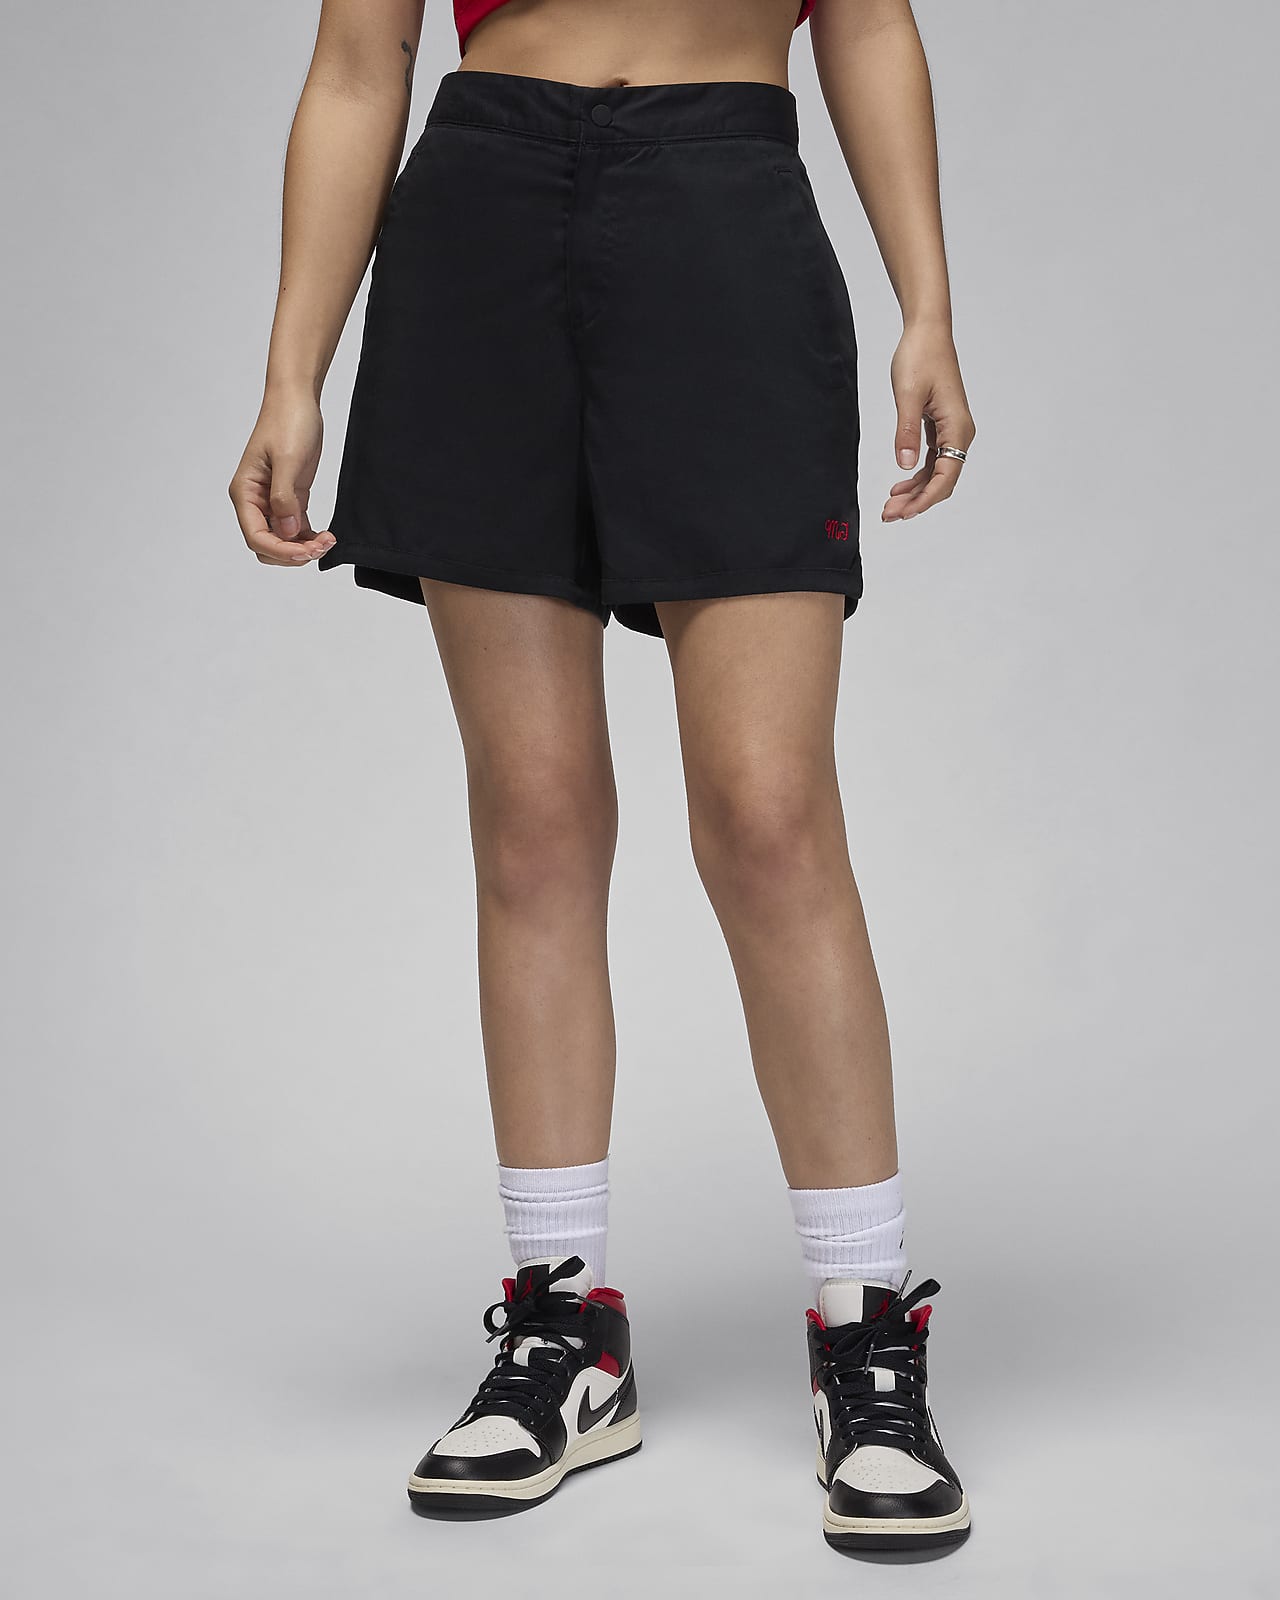 Jordan Women's Woven Shorts